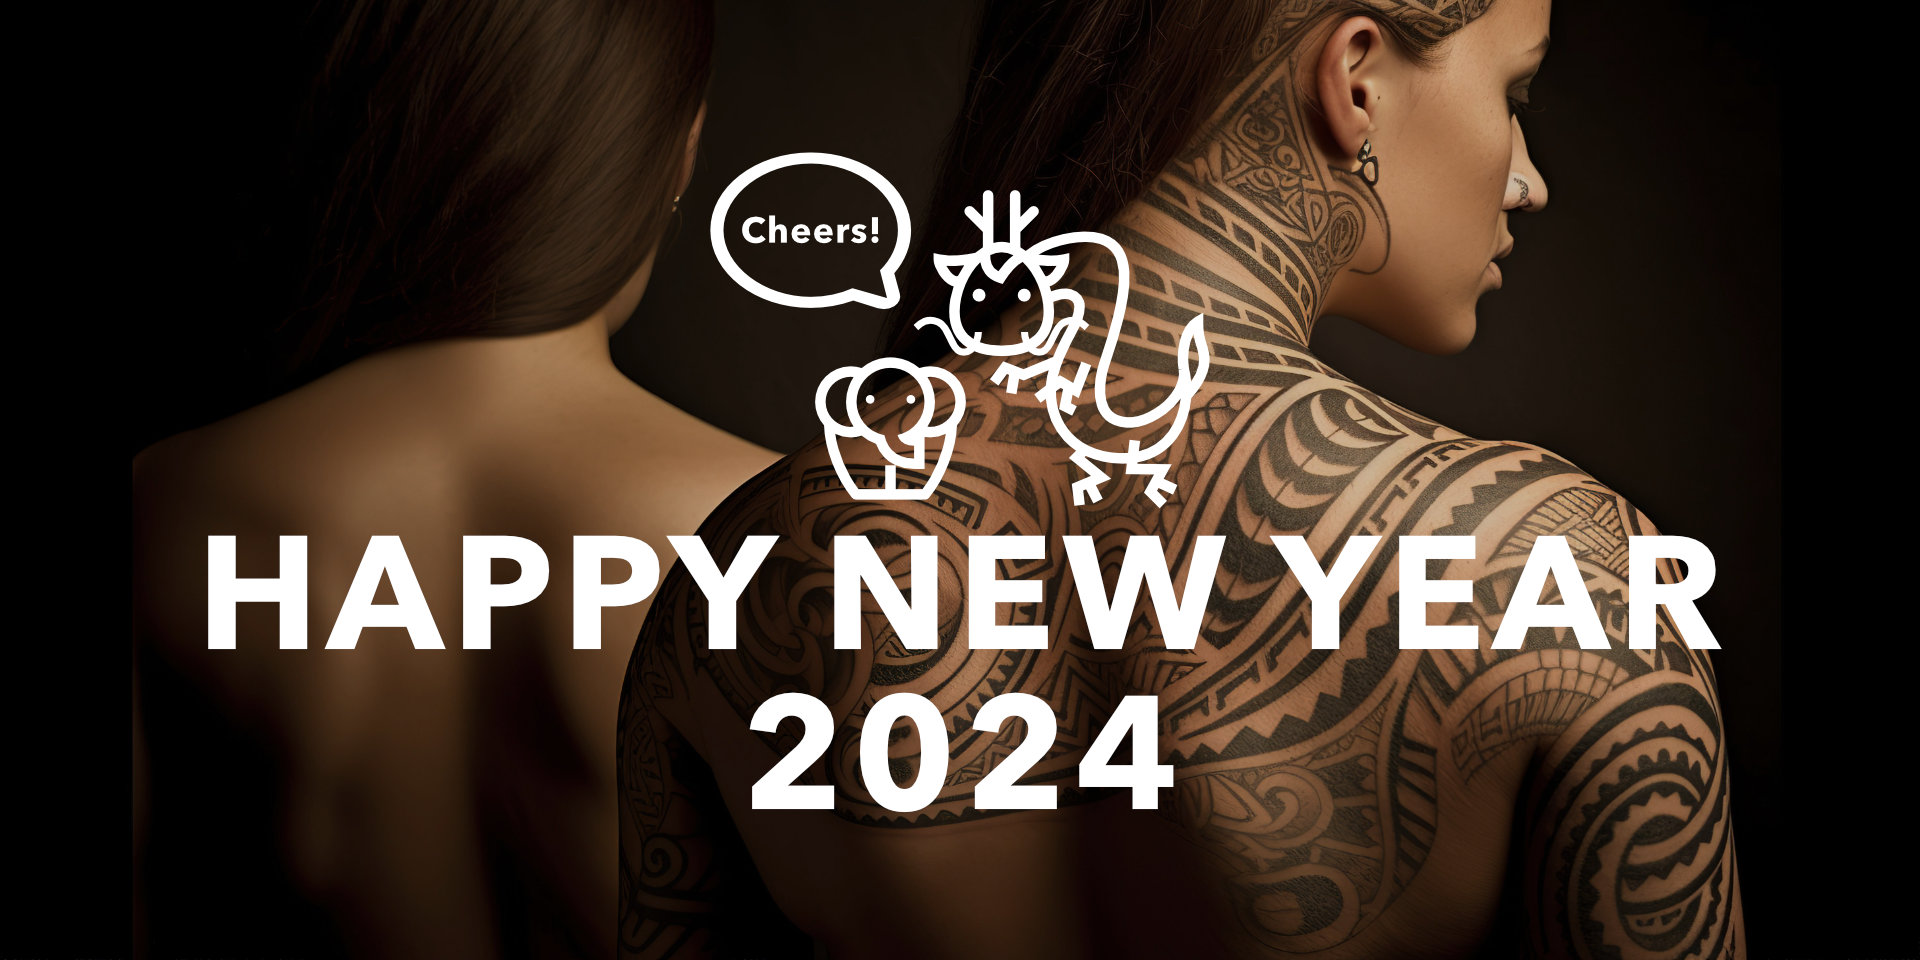 HAPPY NEW YEAR! 2024!